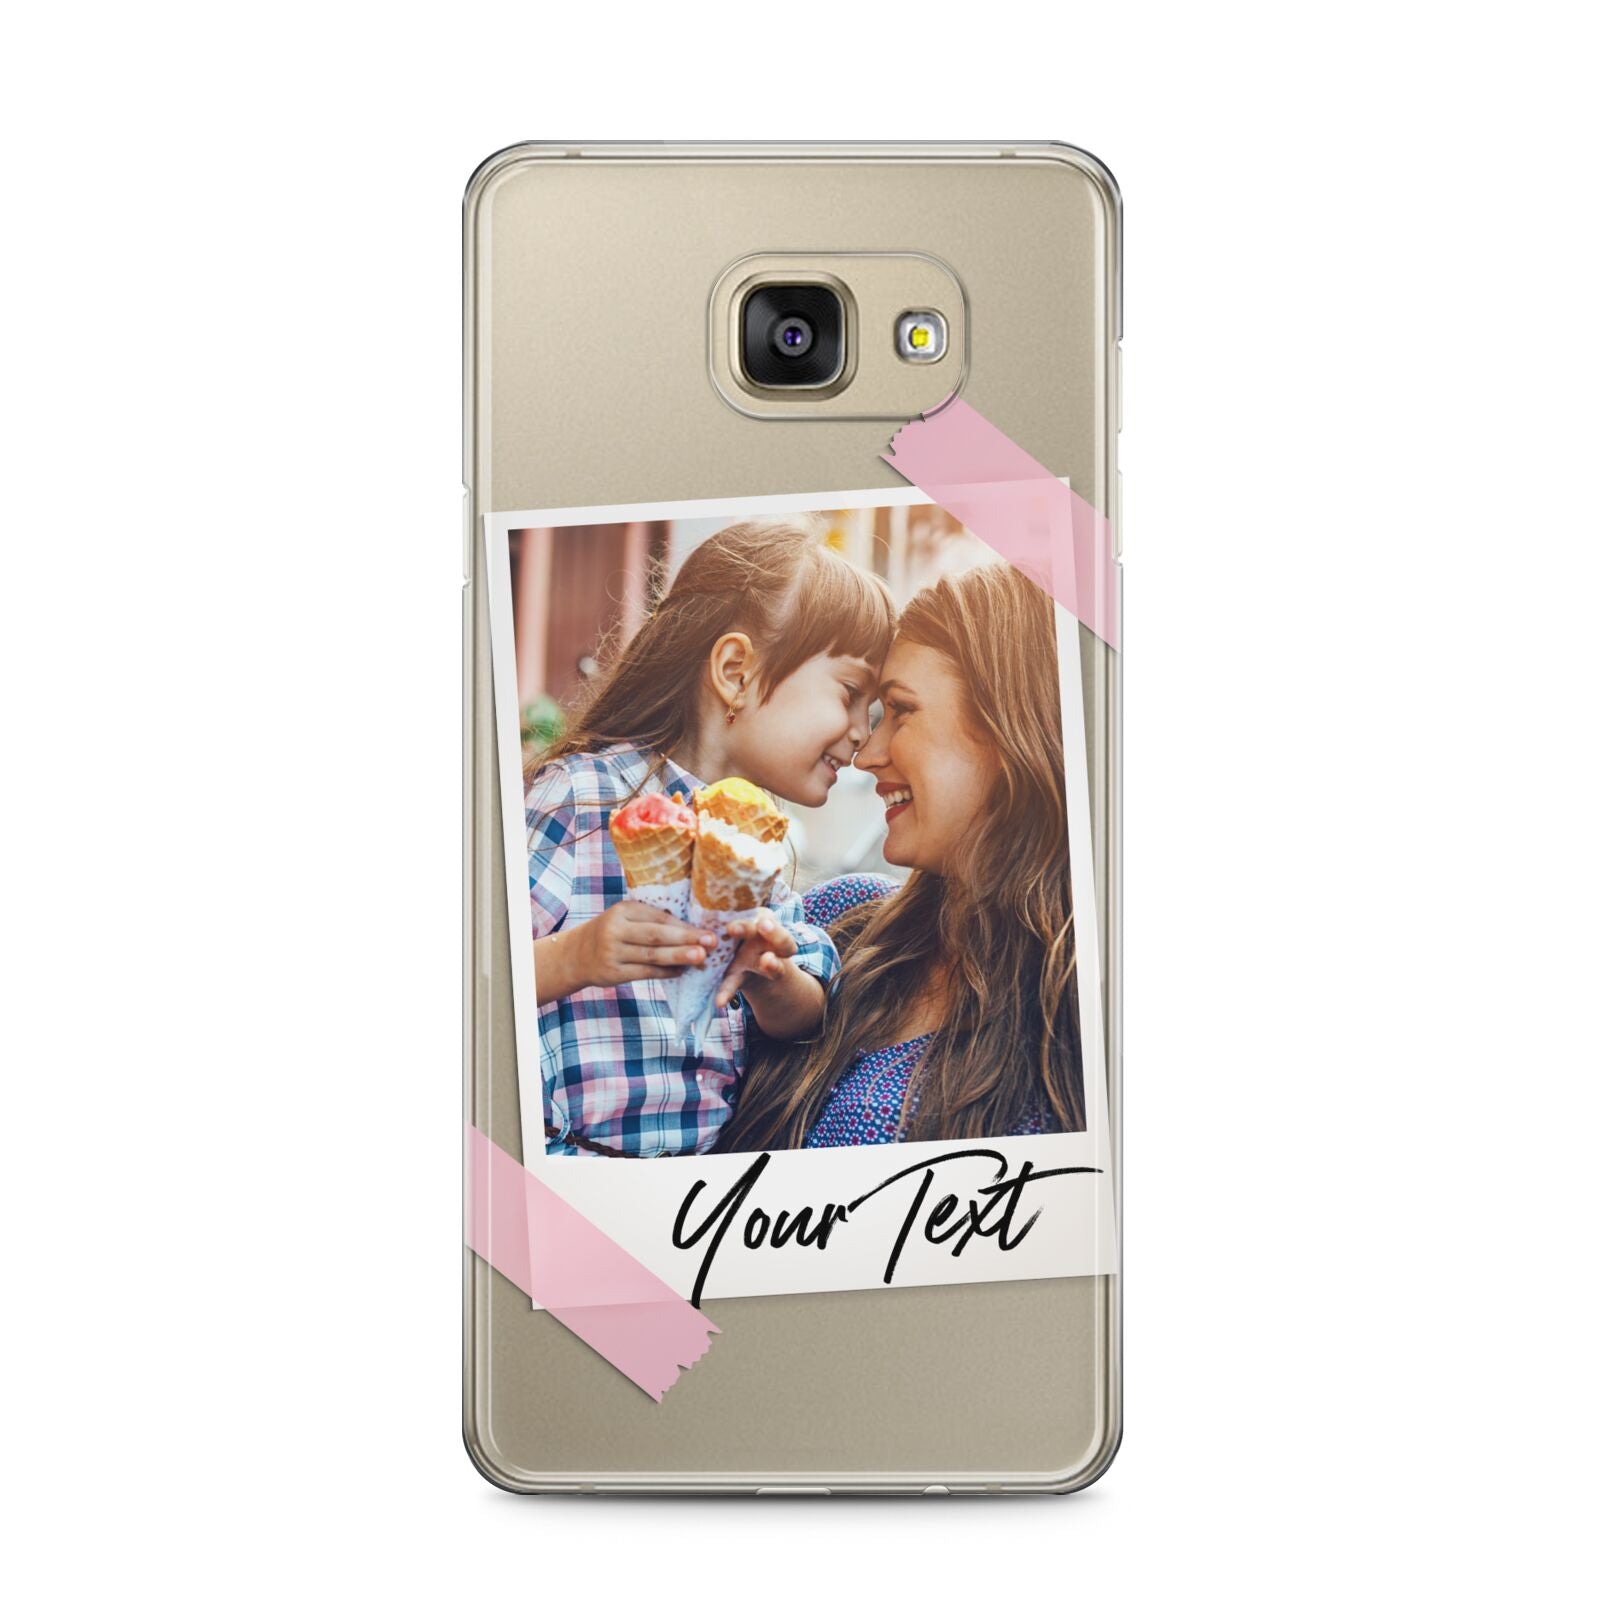 Photo Frame Samsung Galaxy A5 2016 Case on gold phone